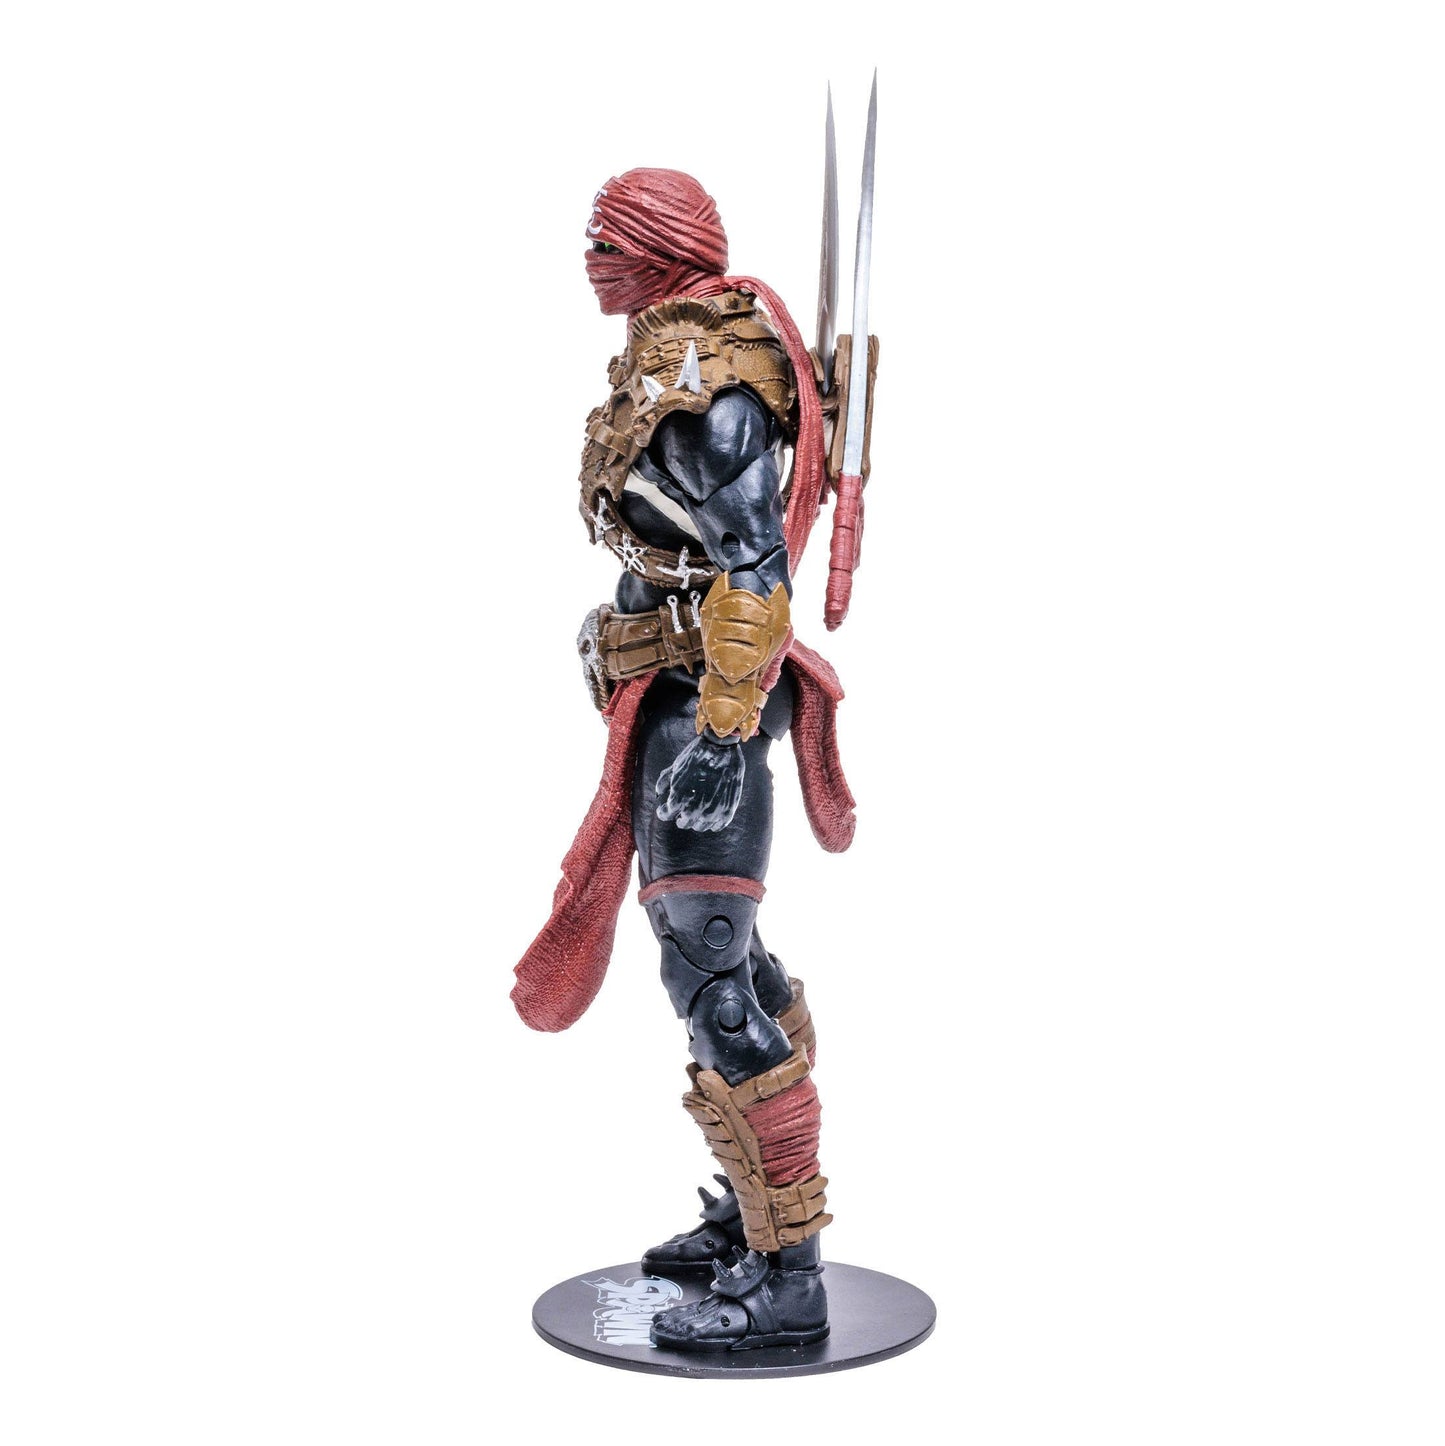 Ninja Spawn - Figurine articulée